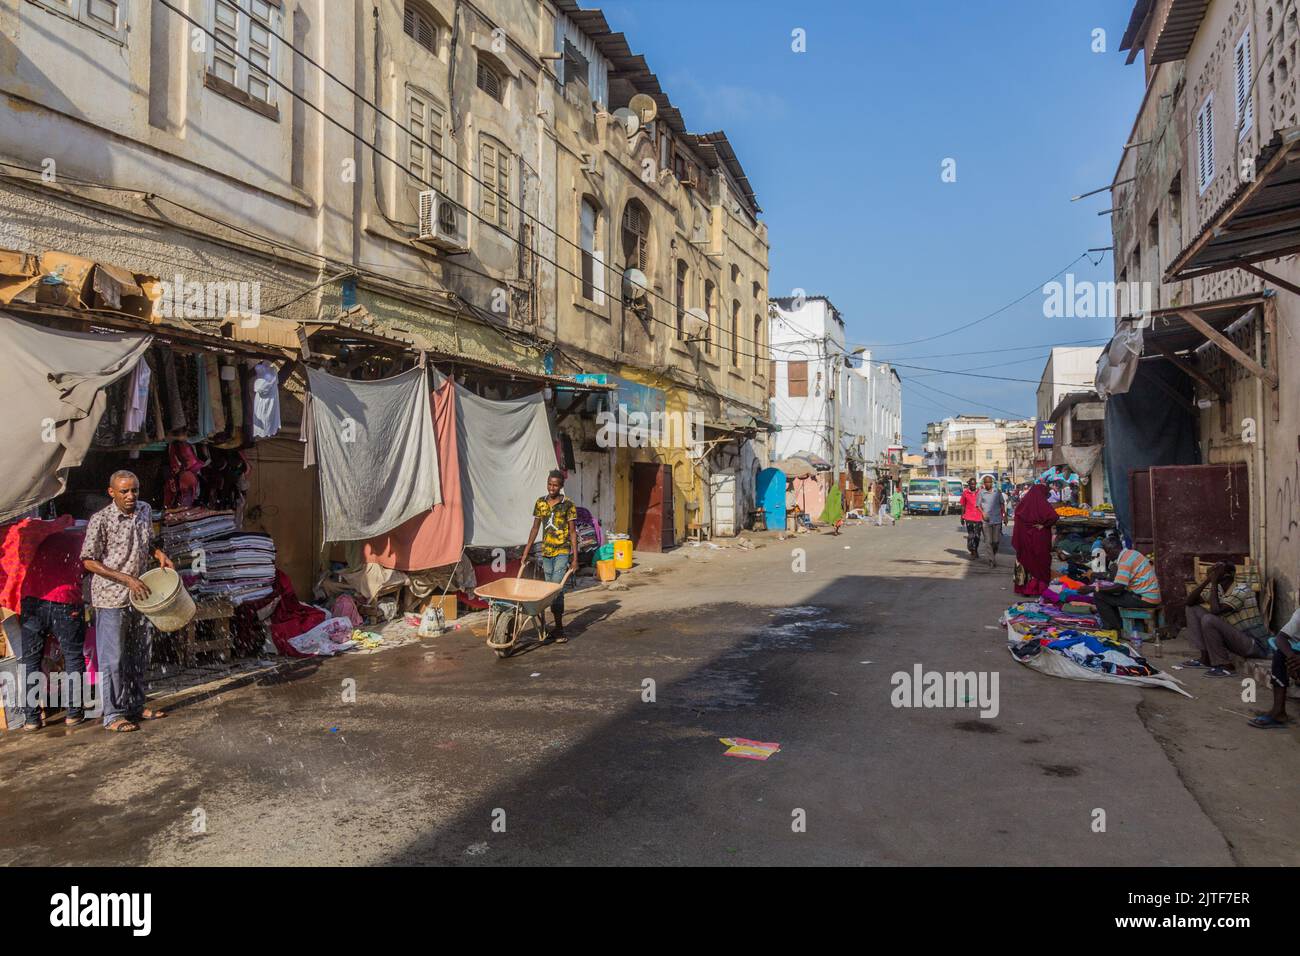 DJIBOUTI, DJIBOUTI - 17 AVRIL 2019 : vue d'une rue à Djibouti, capitale de Djibouti. Banque D'Images